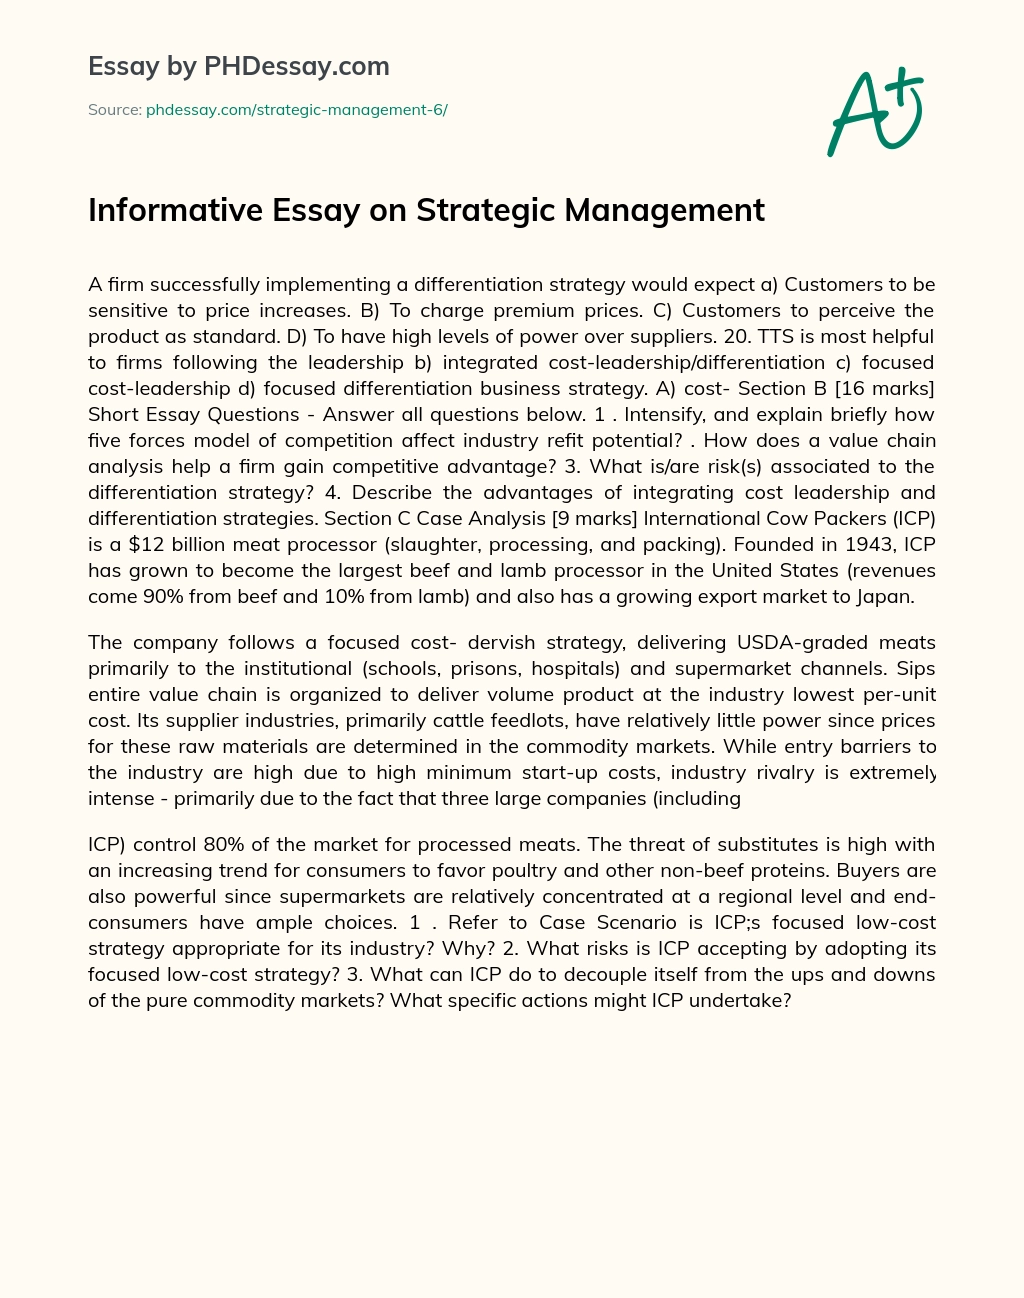 Informative Essay on Strategic Management essay